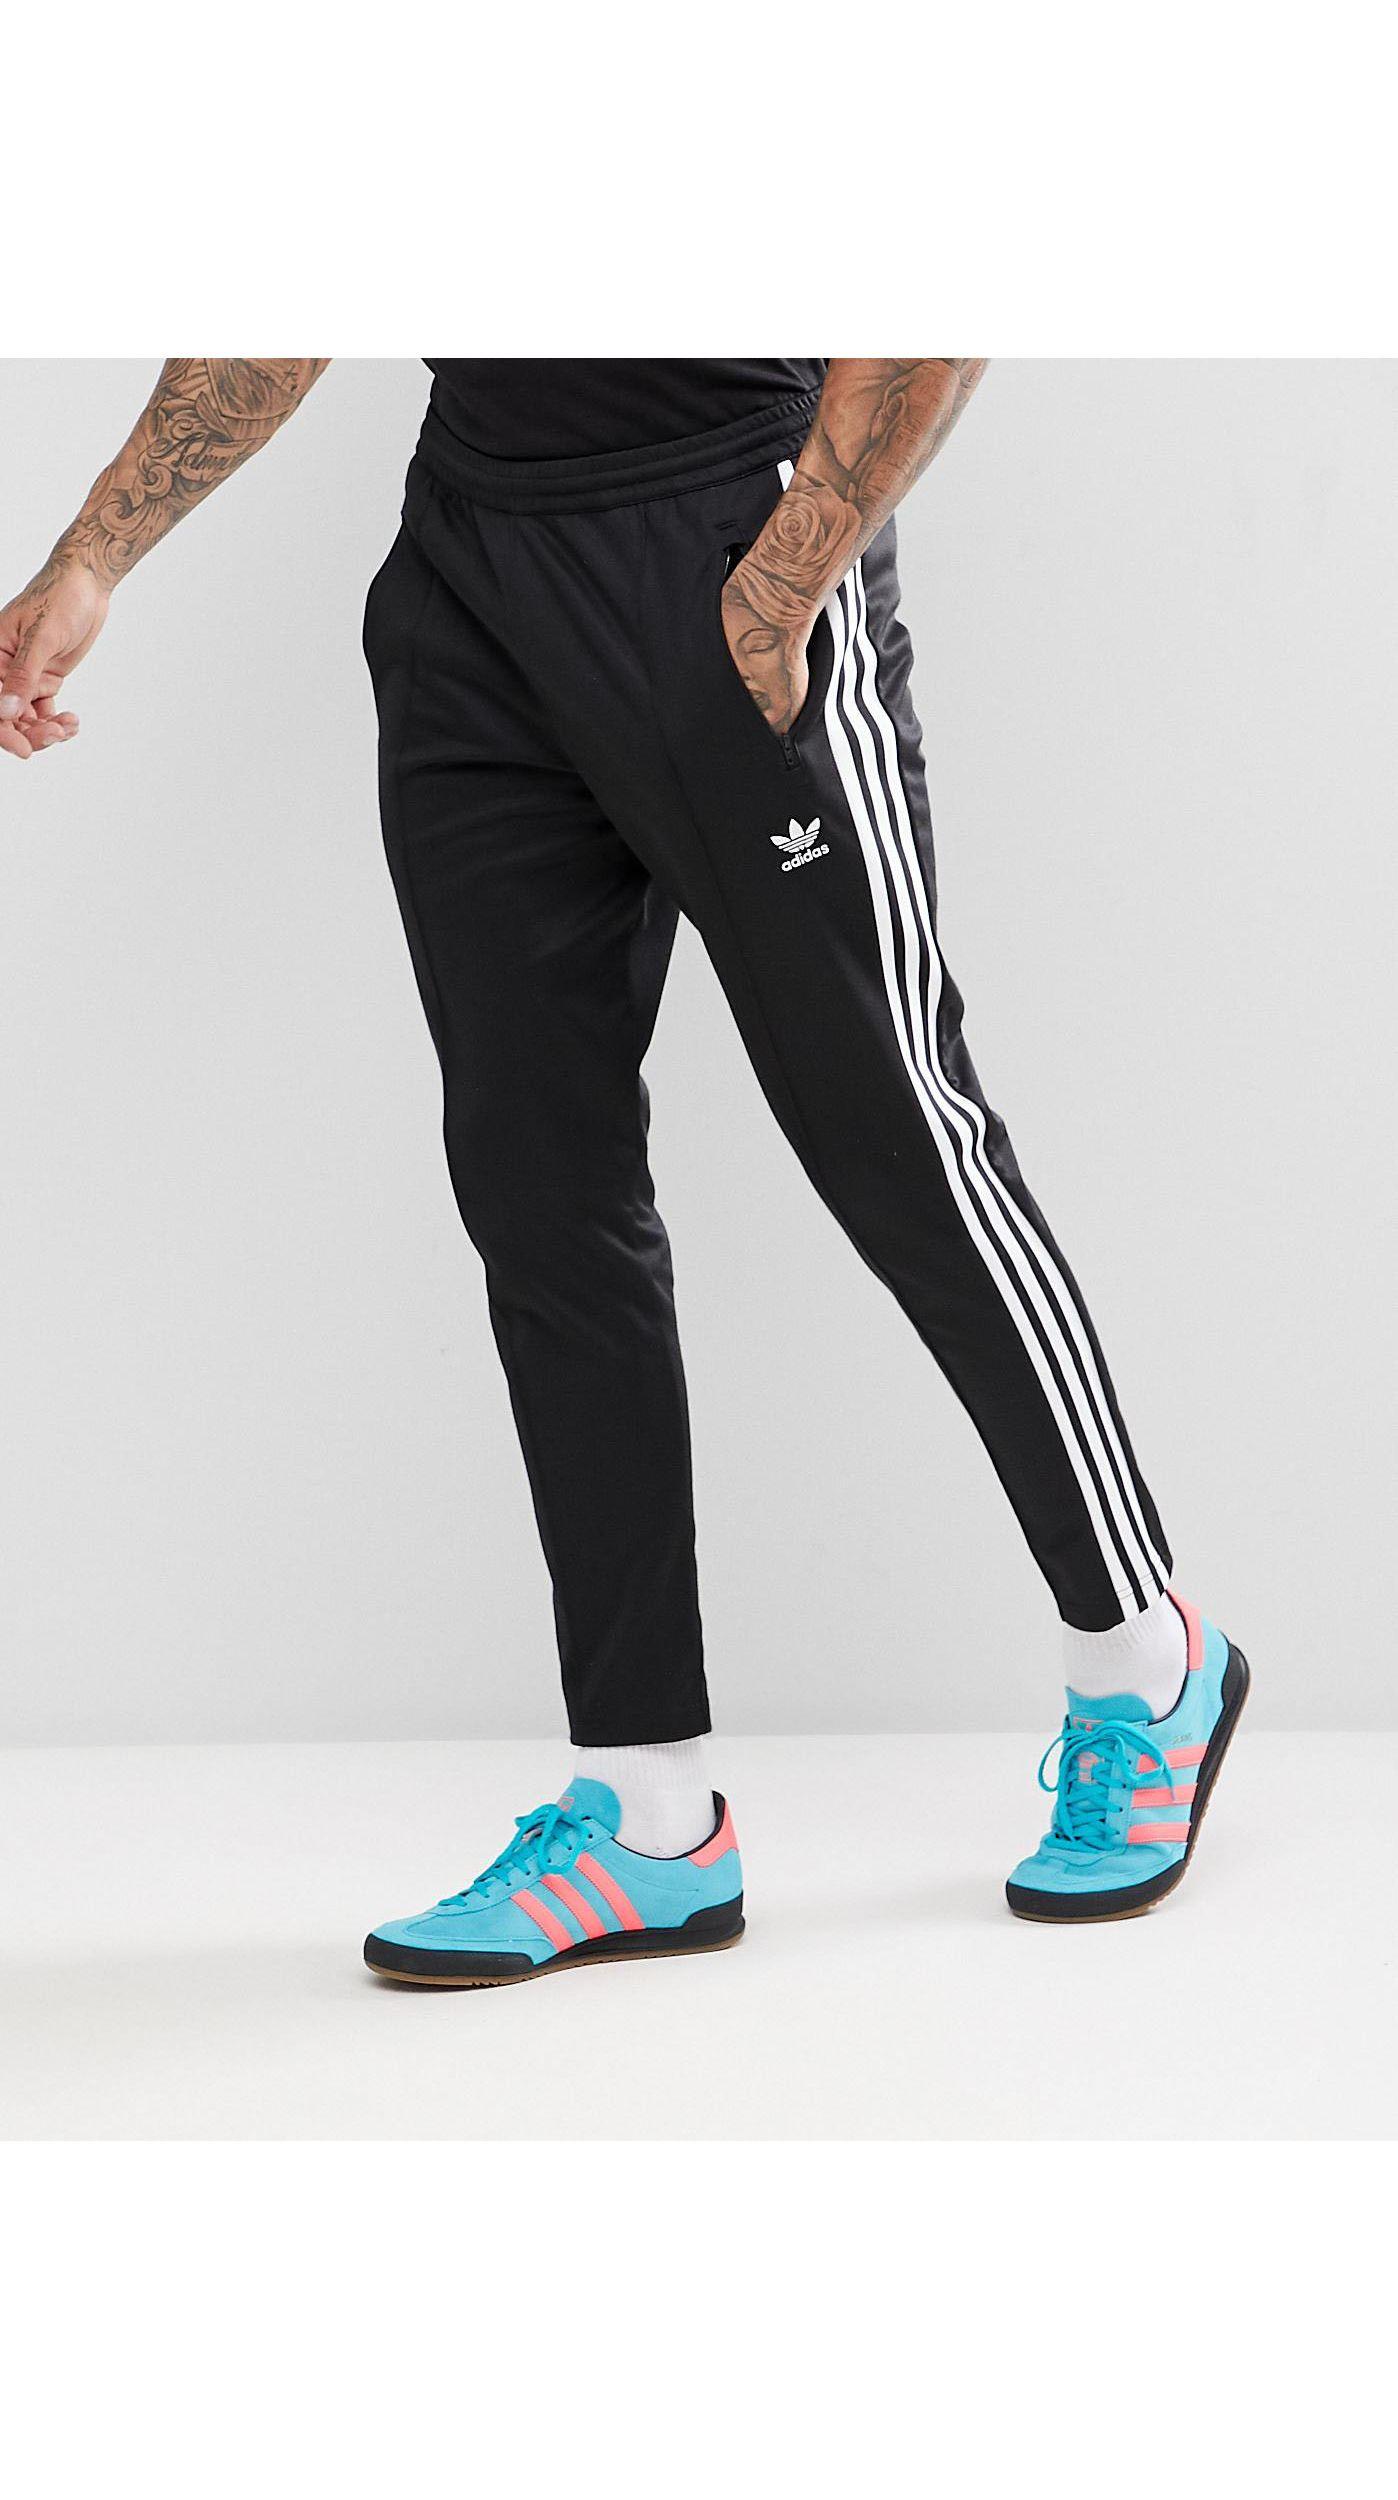 adidas original slim fit joggers